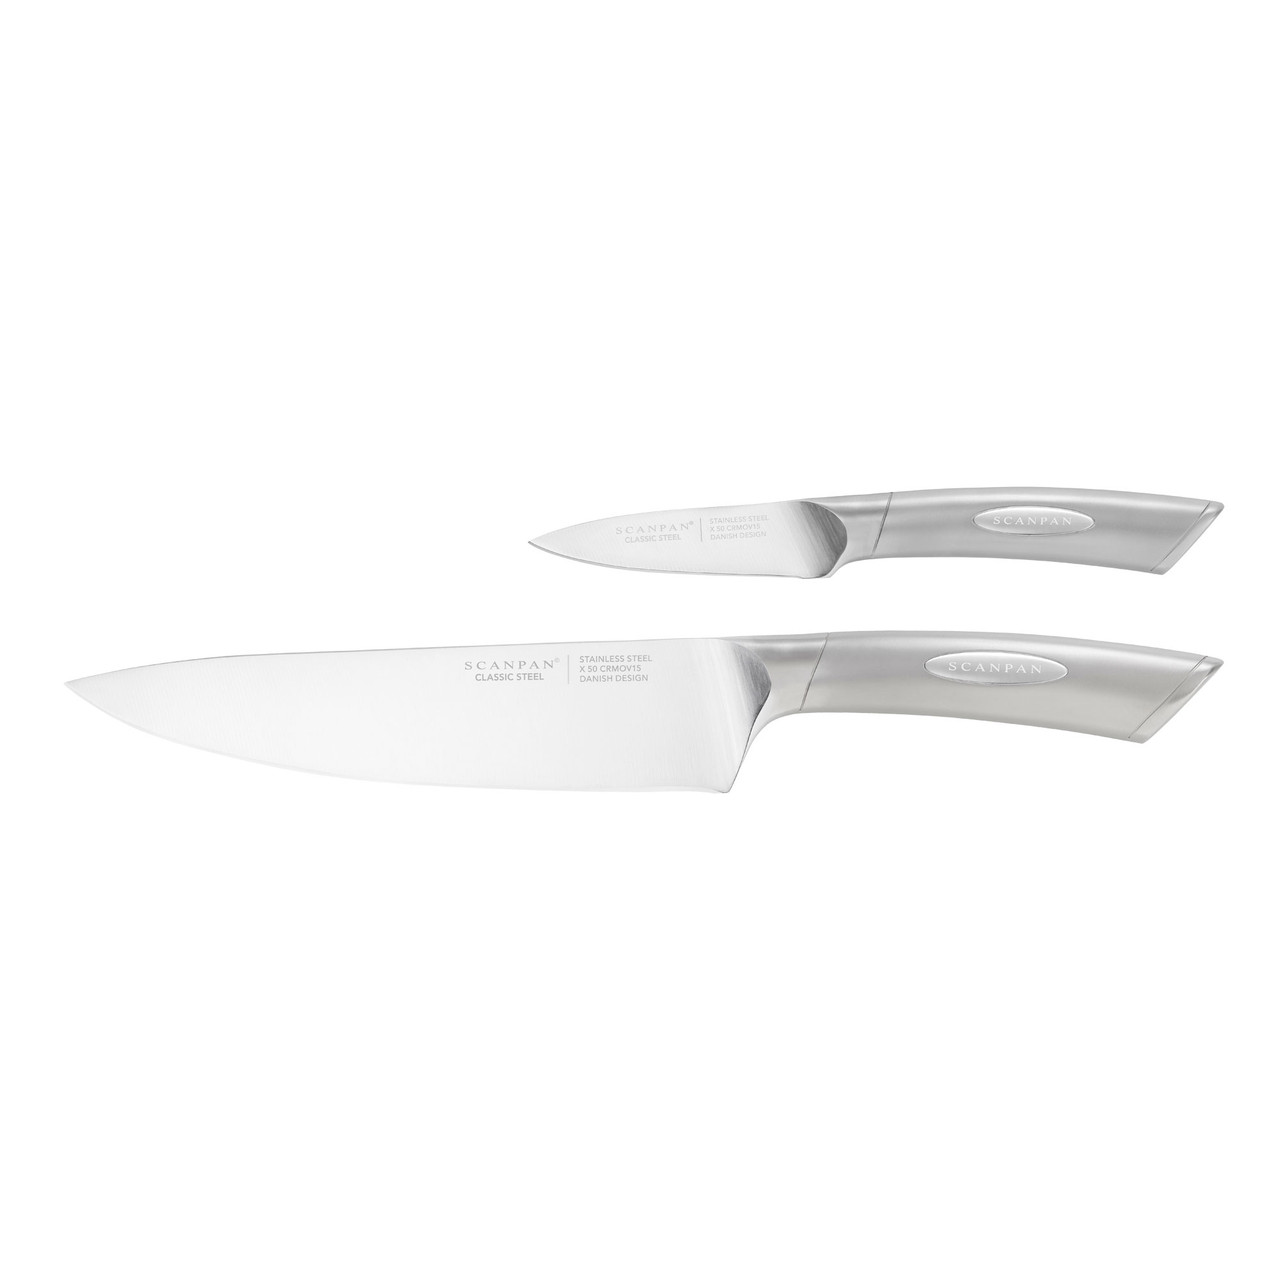 Categories - Knives & Cutlery - Blocks & Sets - Page 1 - Scanpan Australia